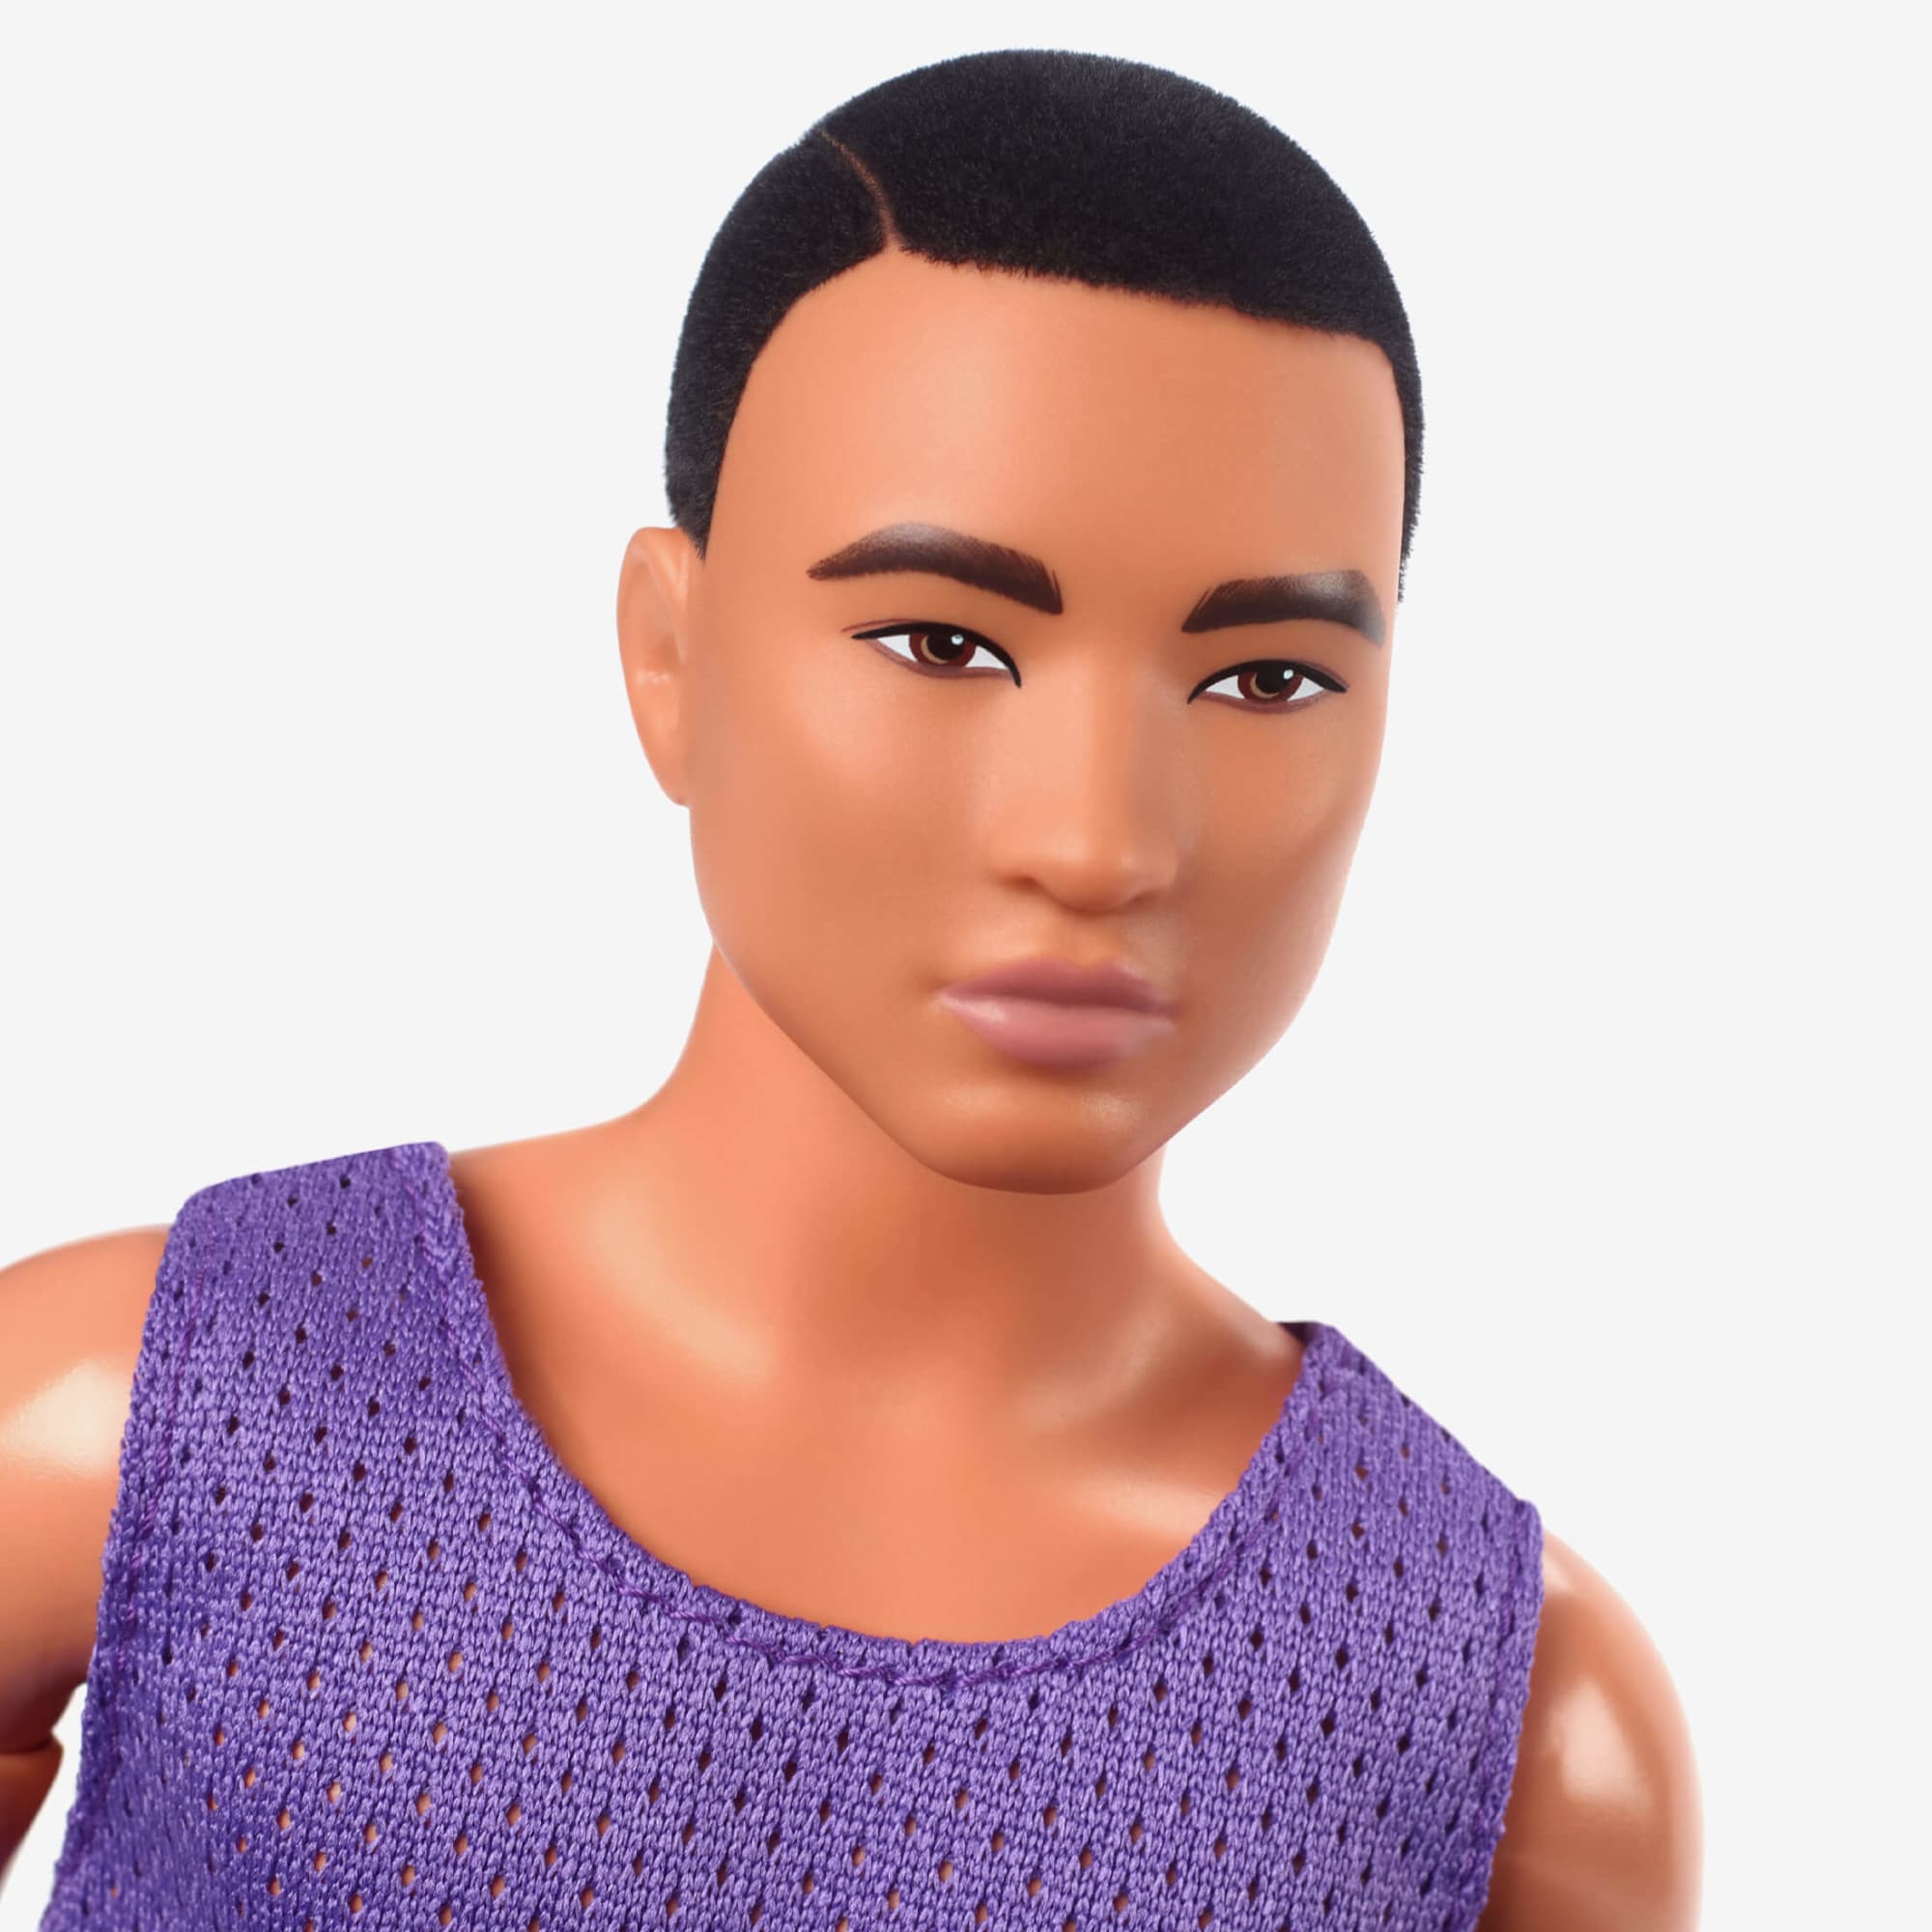 Barbie Looks Ken Doll (Original, Short Black Hair)